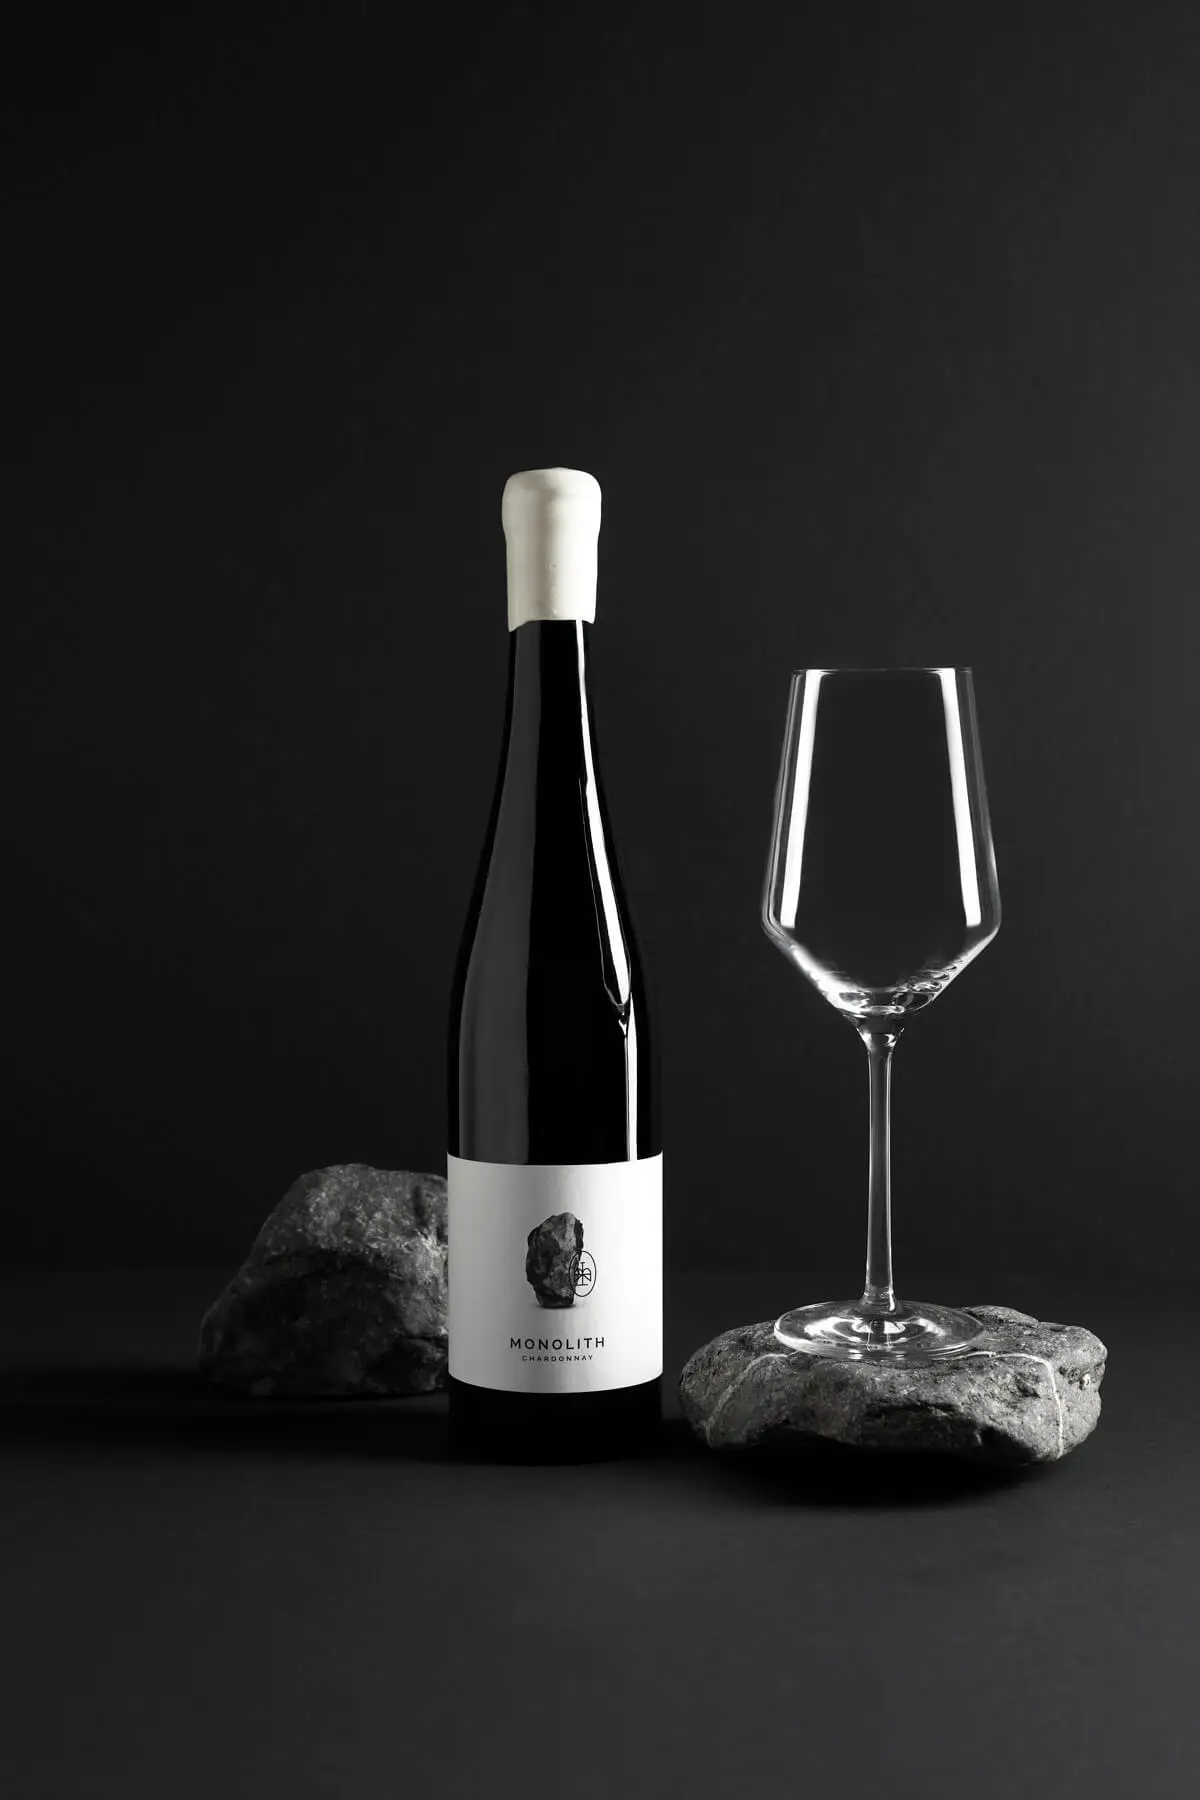 Mona-Wingerter-portfolio-grafiker-grafikdesign-freelance-art-director-kaiserslautern-wachenheim-Logo-logodesign-hbw-winery-wine-packaging-brand-bottle-design-Laura-Morgenstern-7